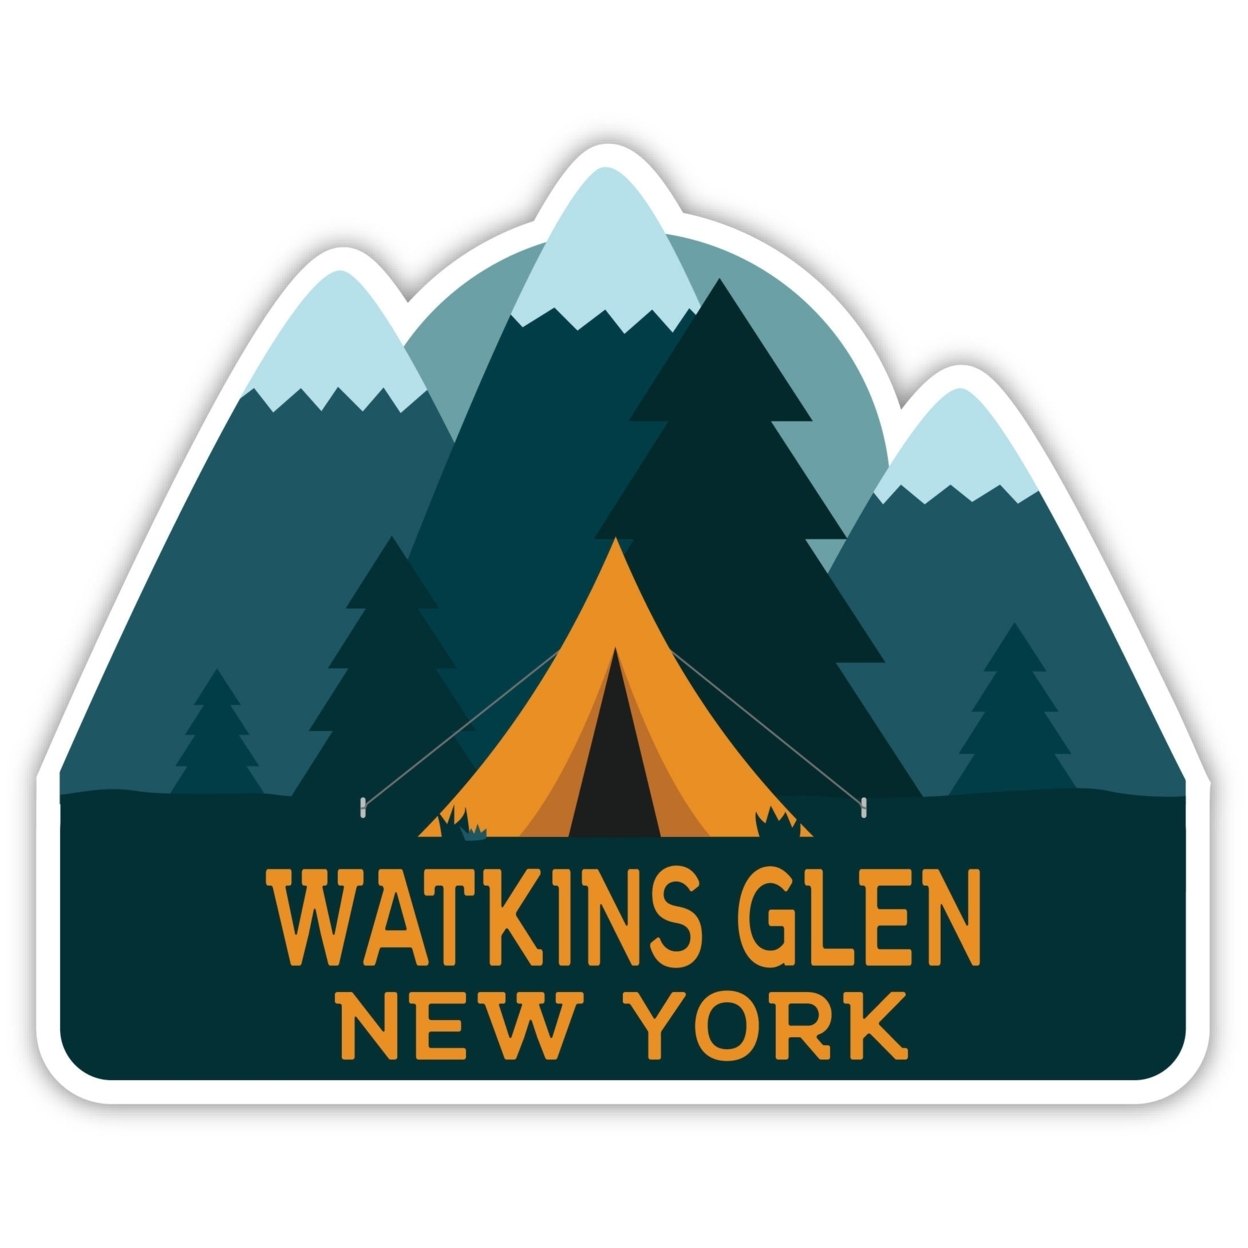 Watkins Glen New York Souvenir Decorative Stickers (Choose Theme And Size) - Single Unit, 4-Inch, Tent